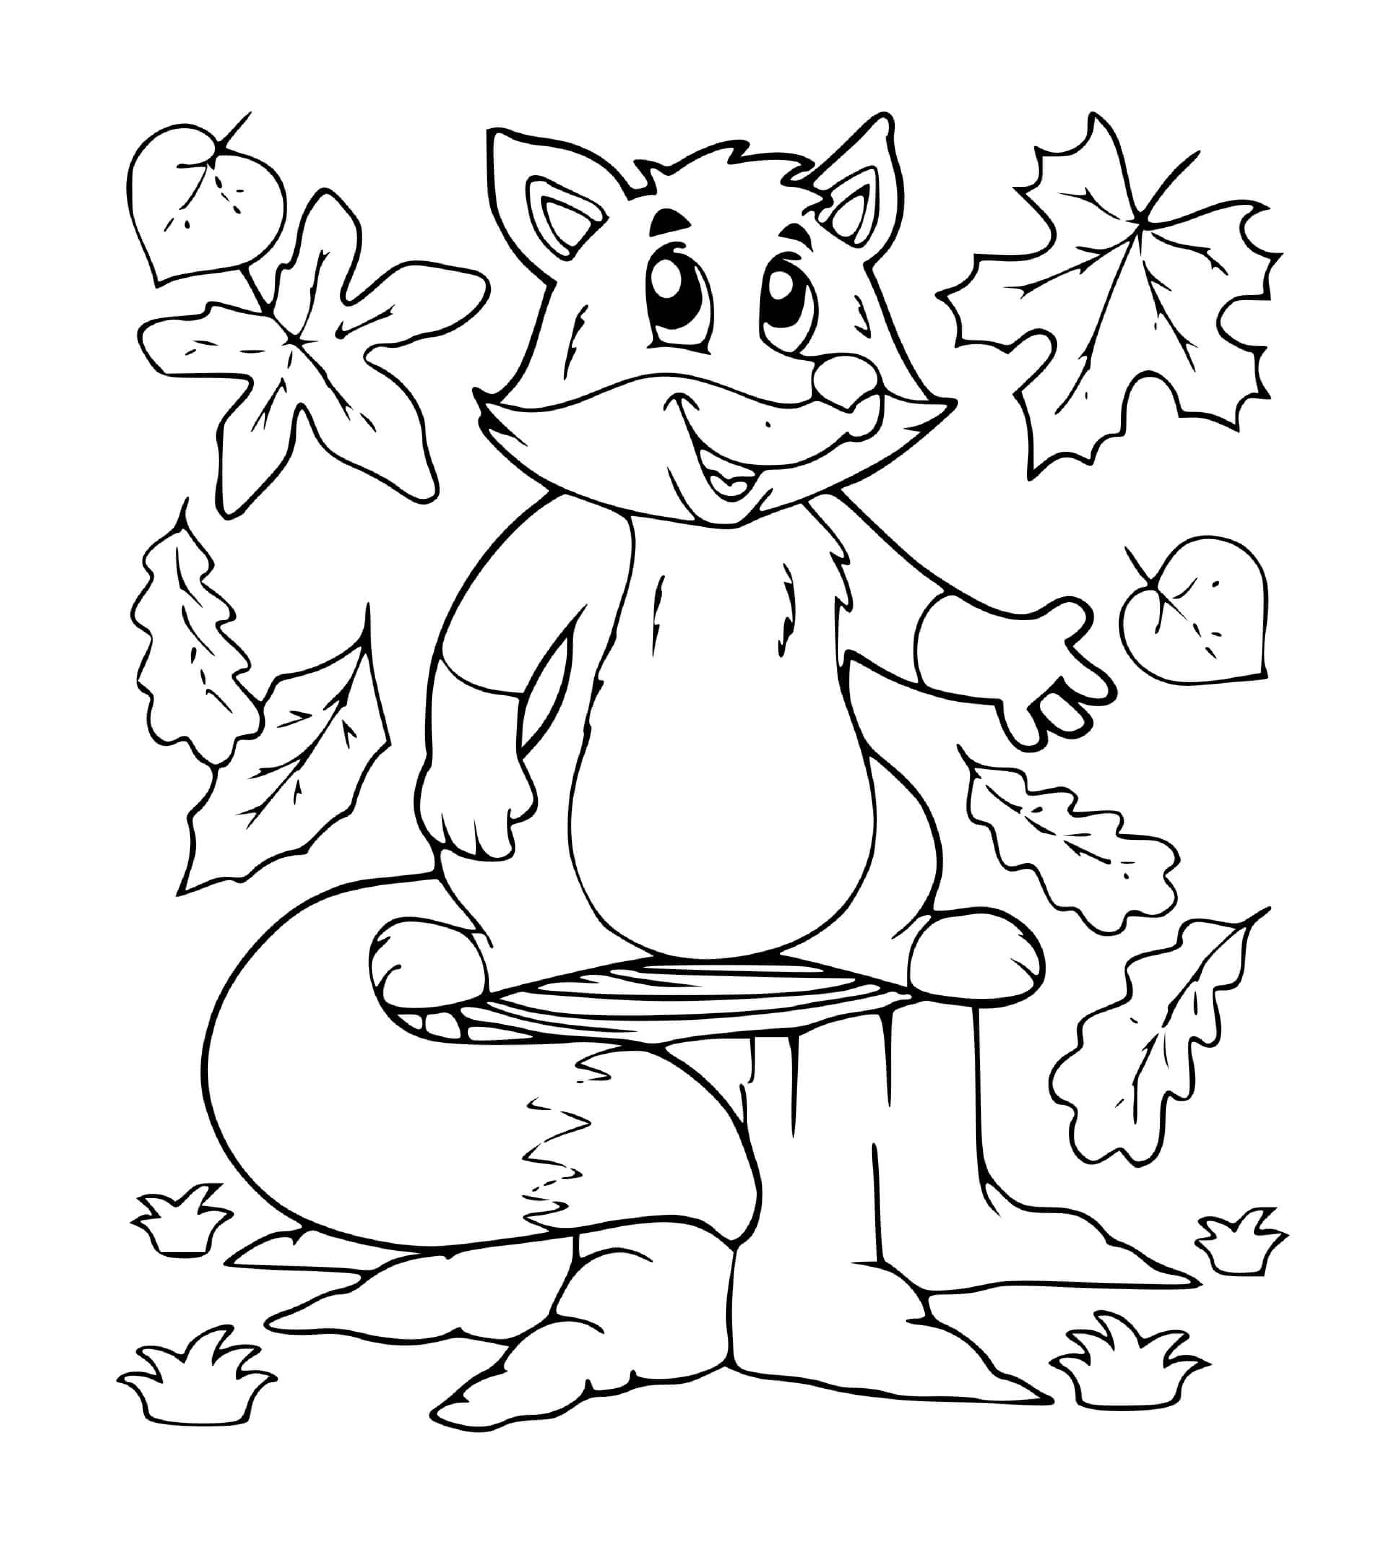  A fox sitting on a tree stump 